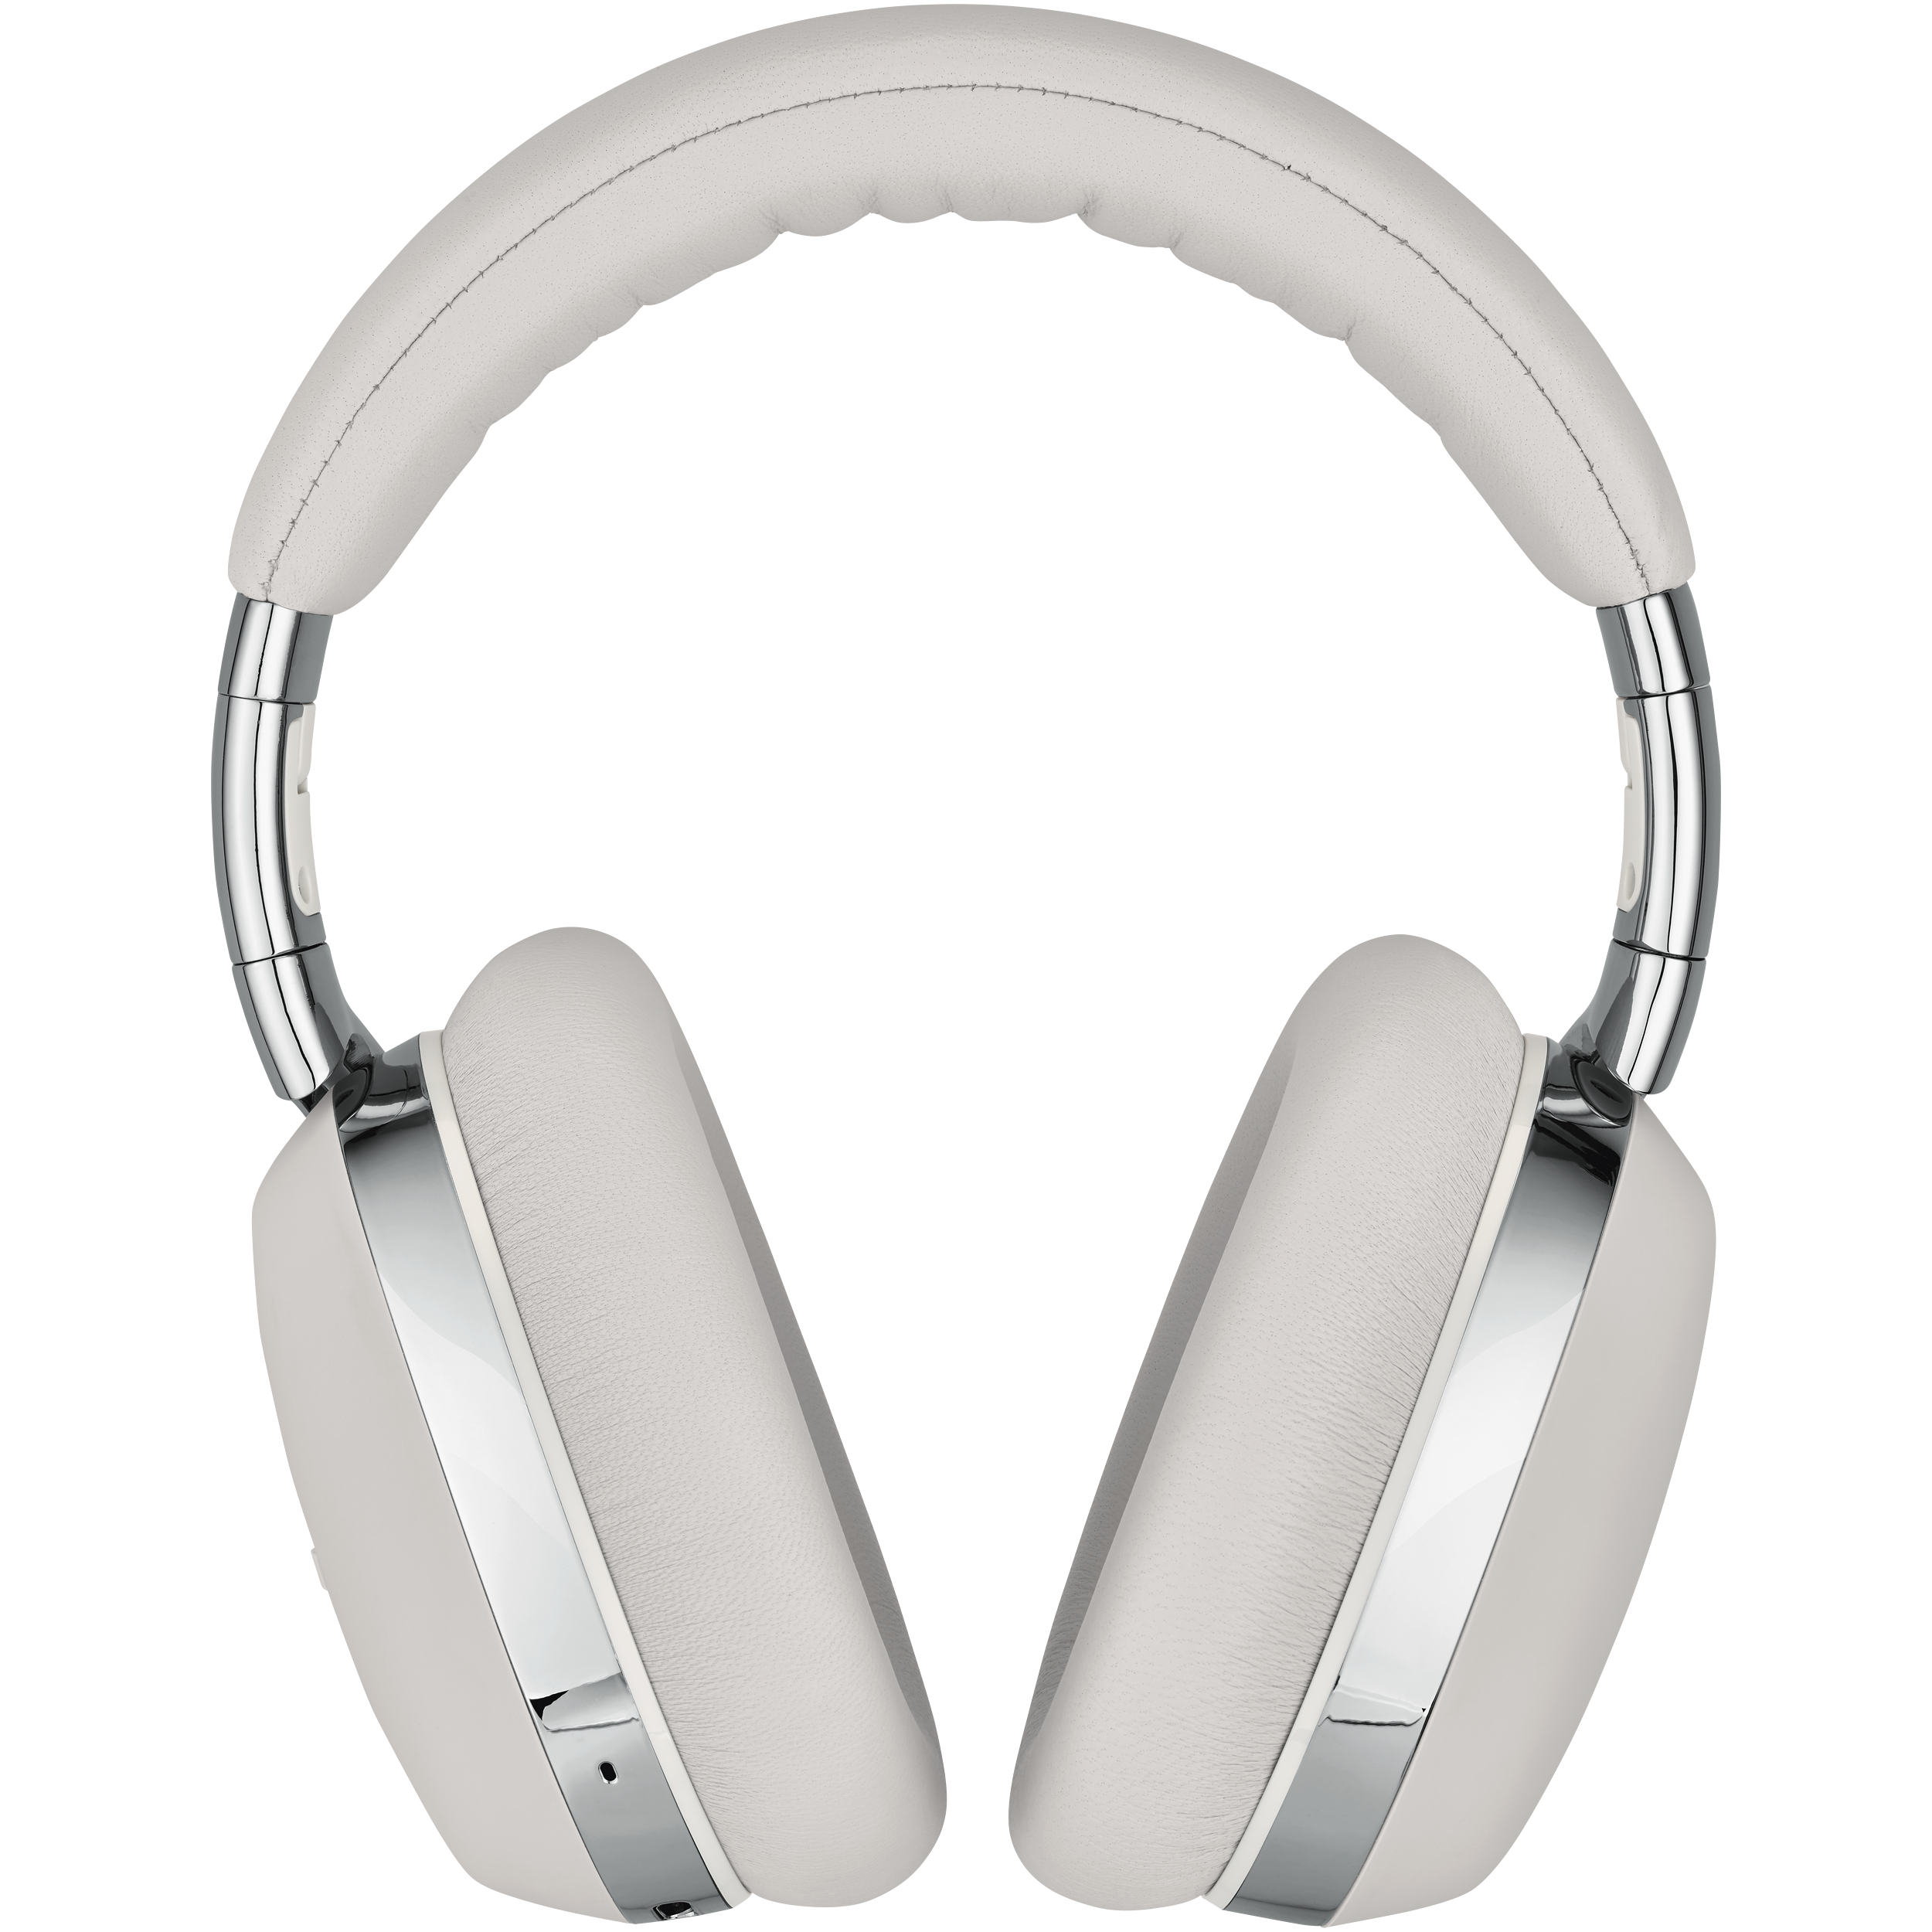 Montblanc MB 01 Over-Ear Headphones Grey